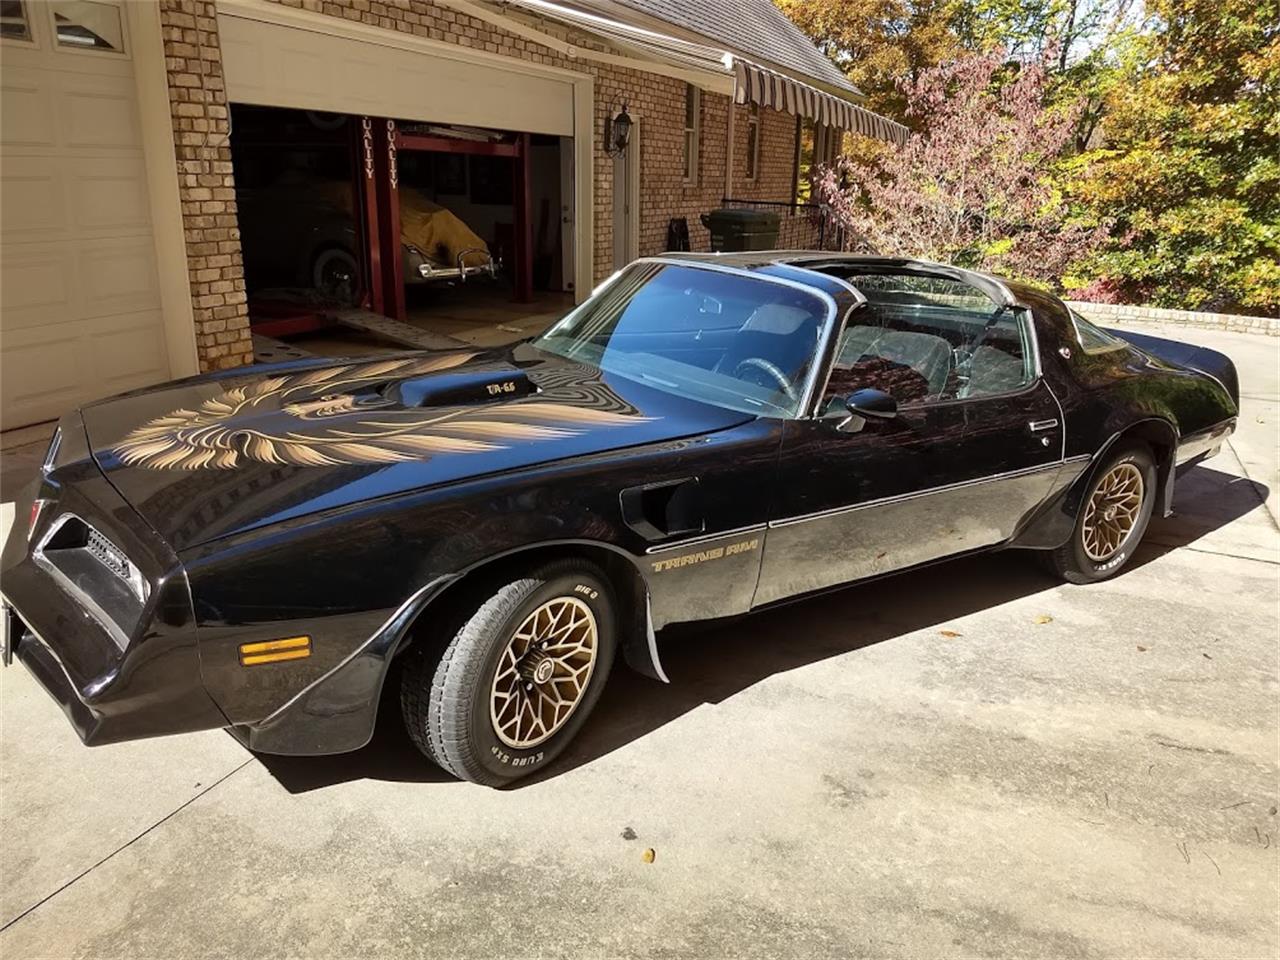 For Sale: 1978 Pontiac Firebird Trans Am in Denton, North Carolina.